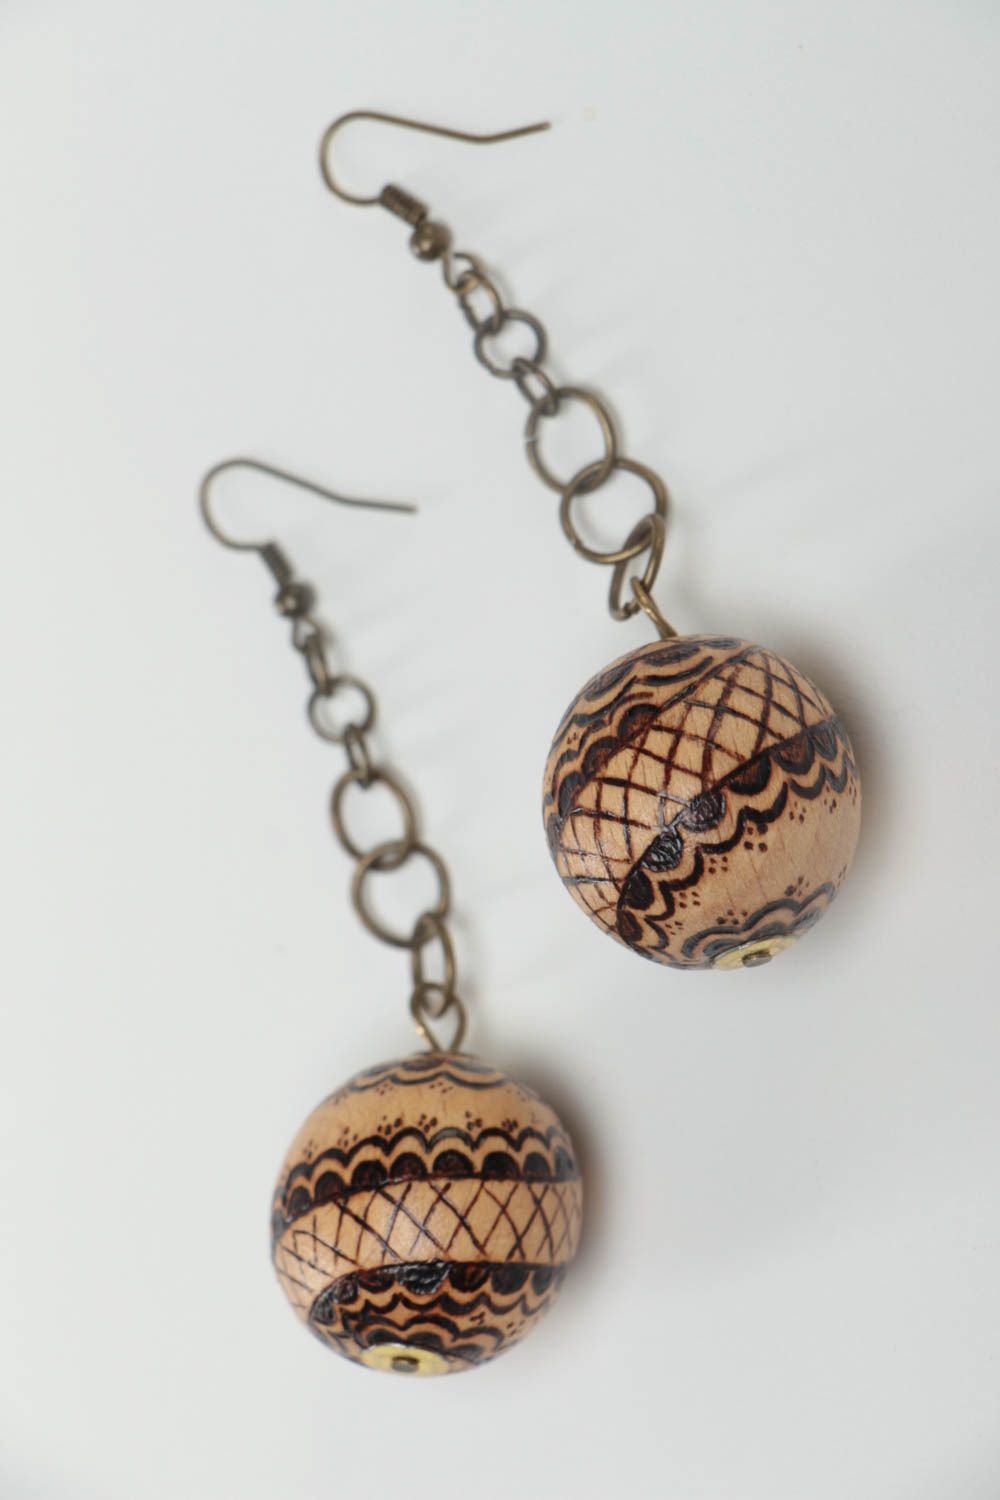 Ball earrings wooden jewelry handmade earrings for girls designer accessories photo 2